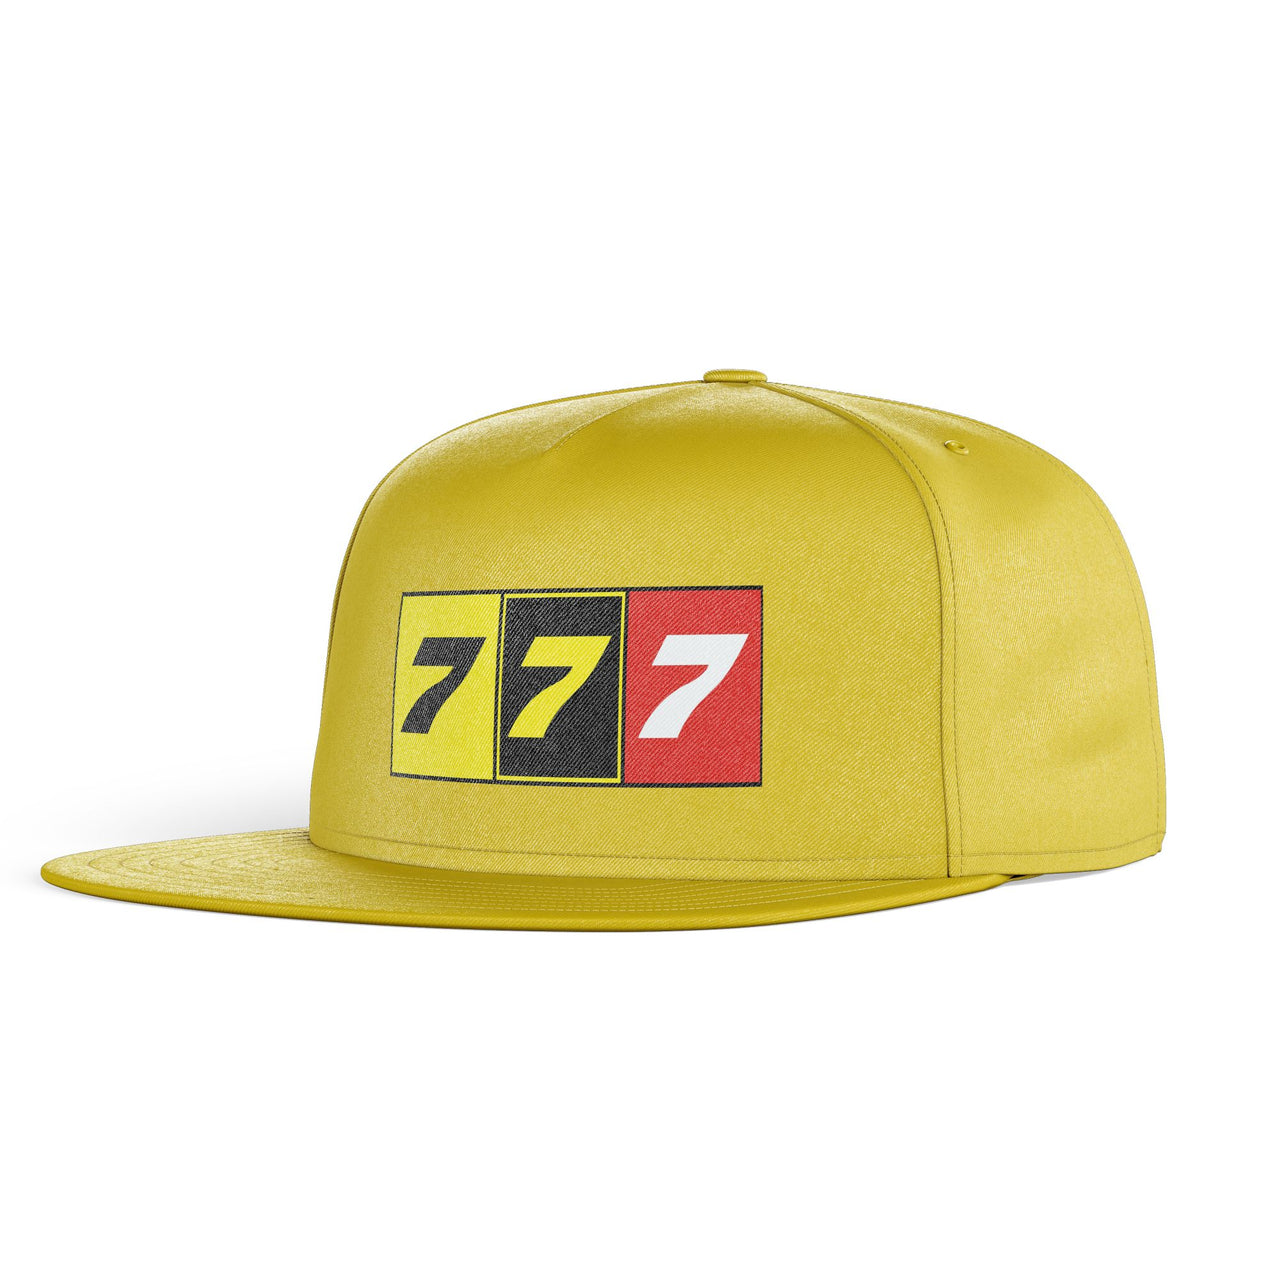 Flat Colourful 777 Designed Snapback Caps & Hats